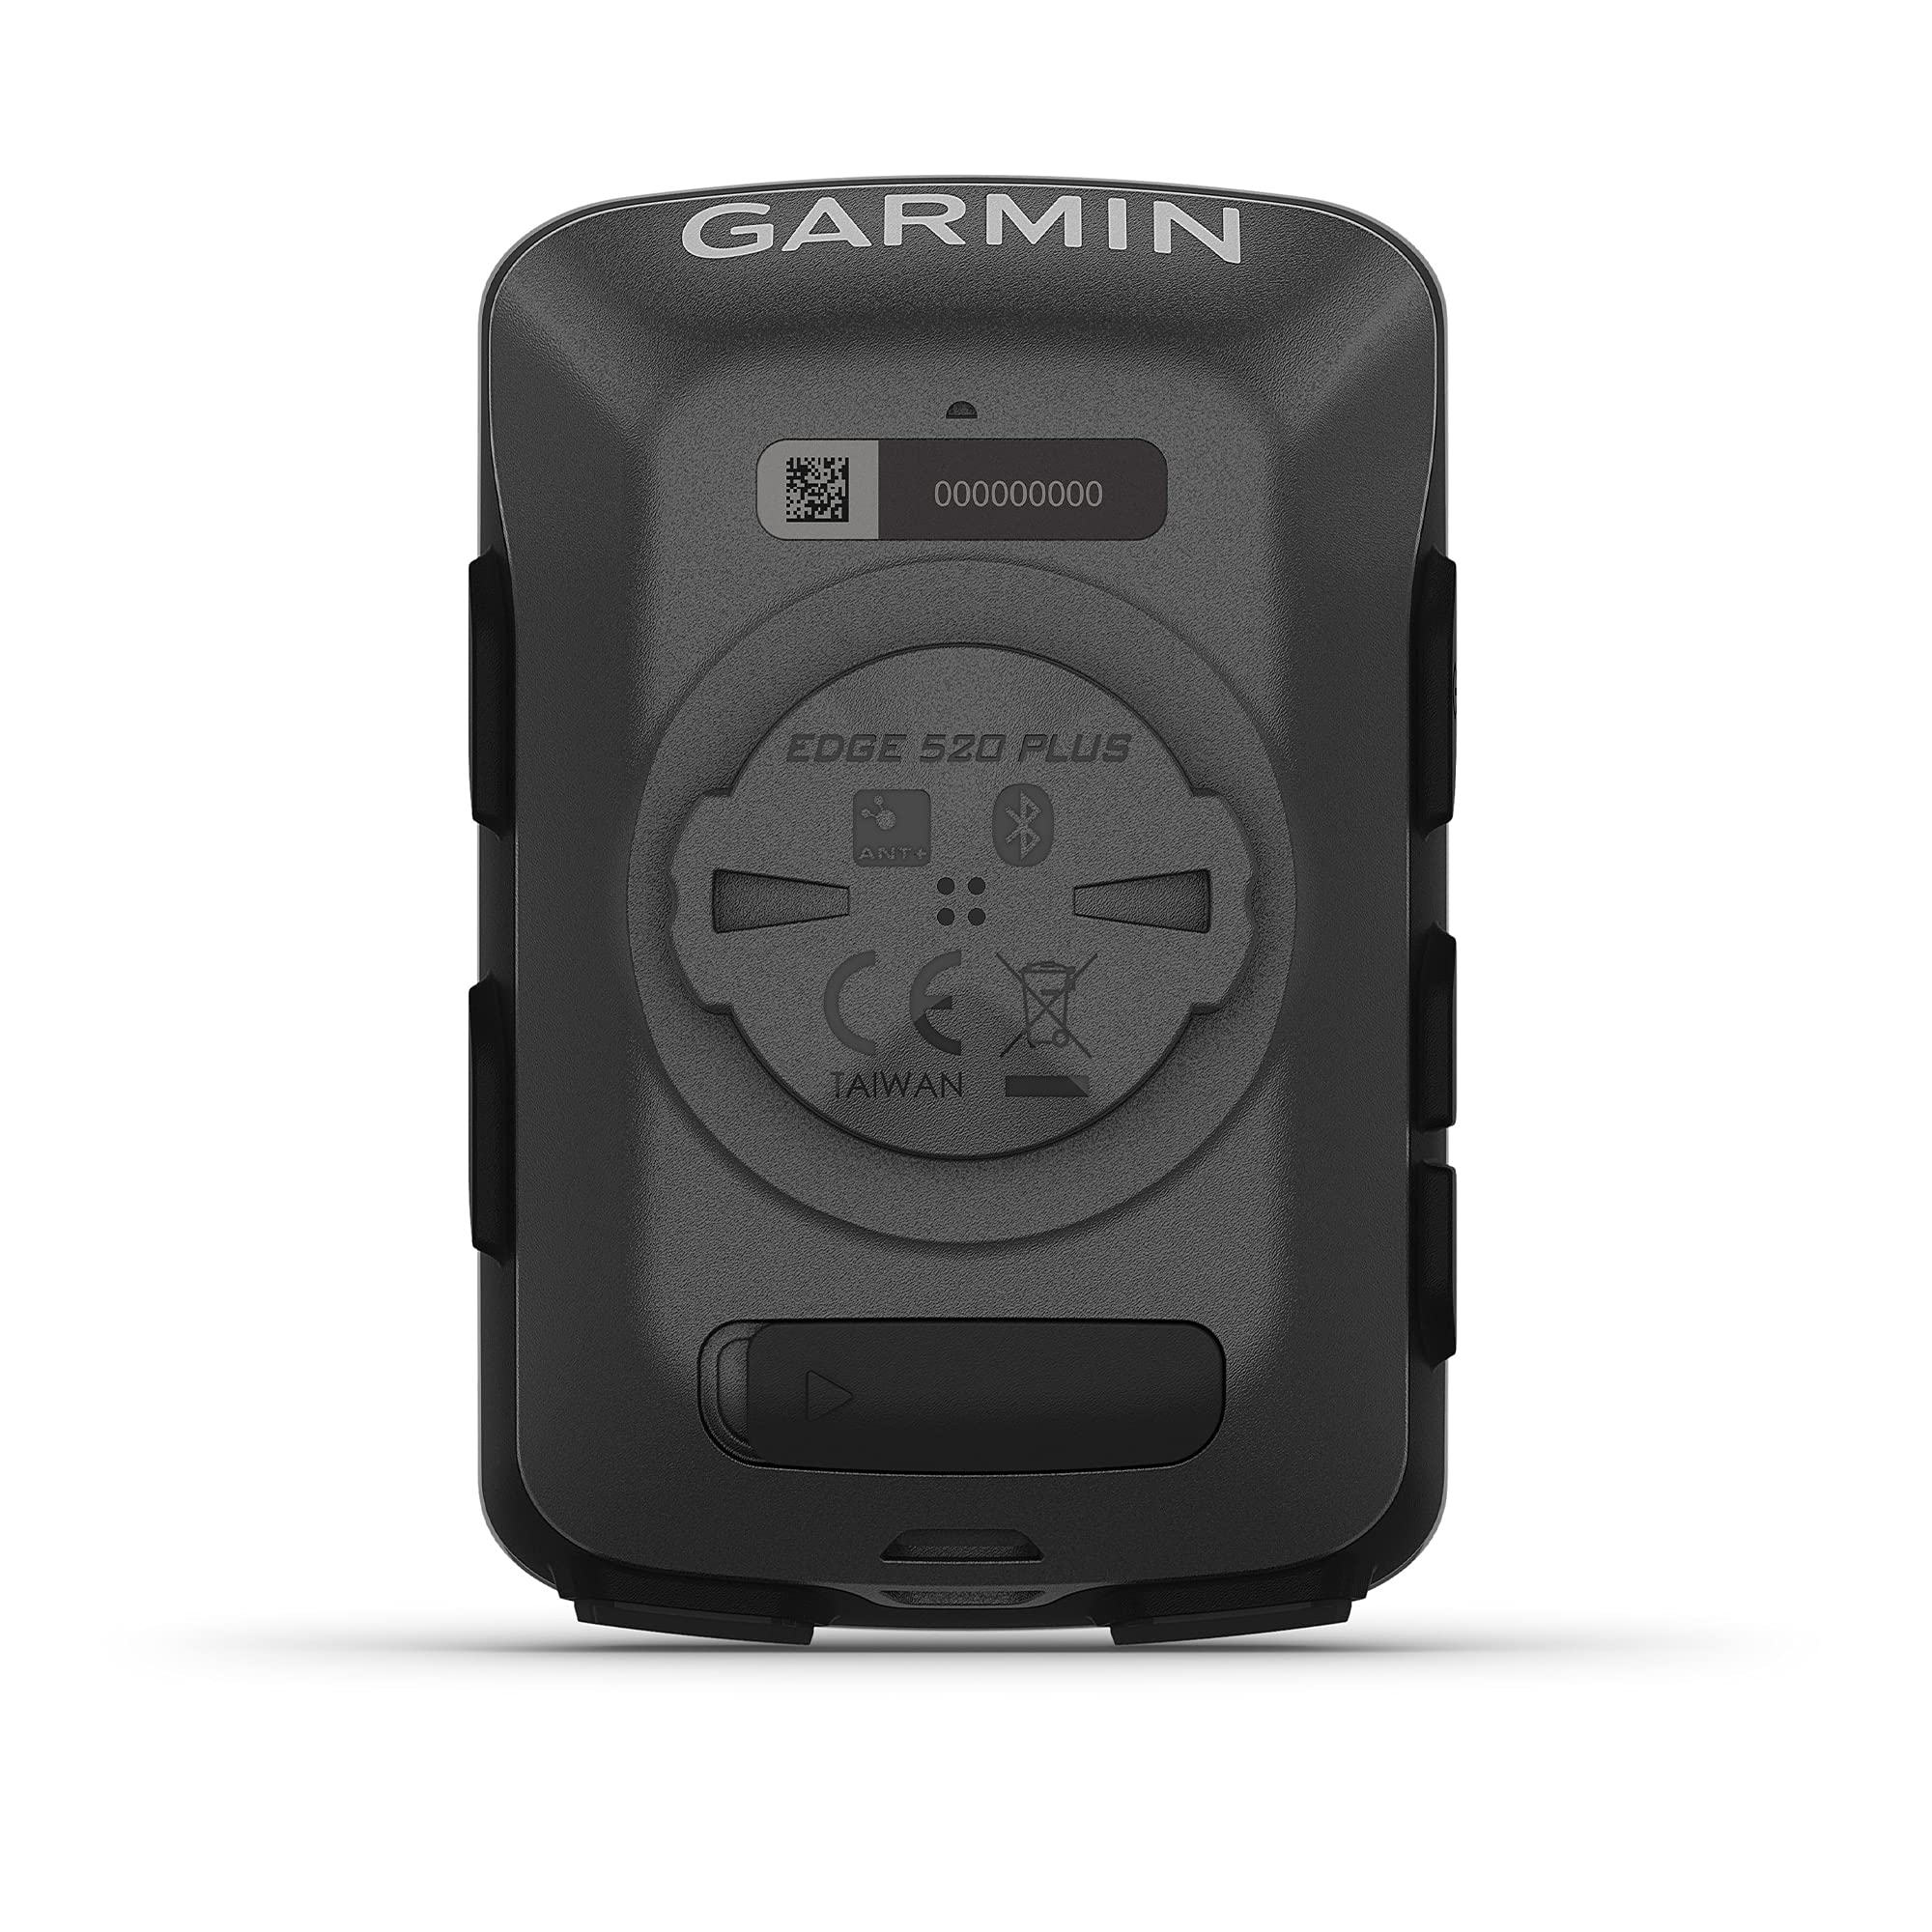 Garmin Edge 520 Plus- Renewed